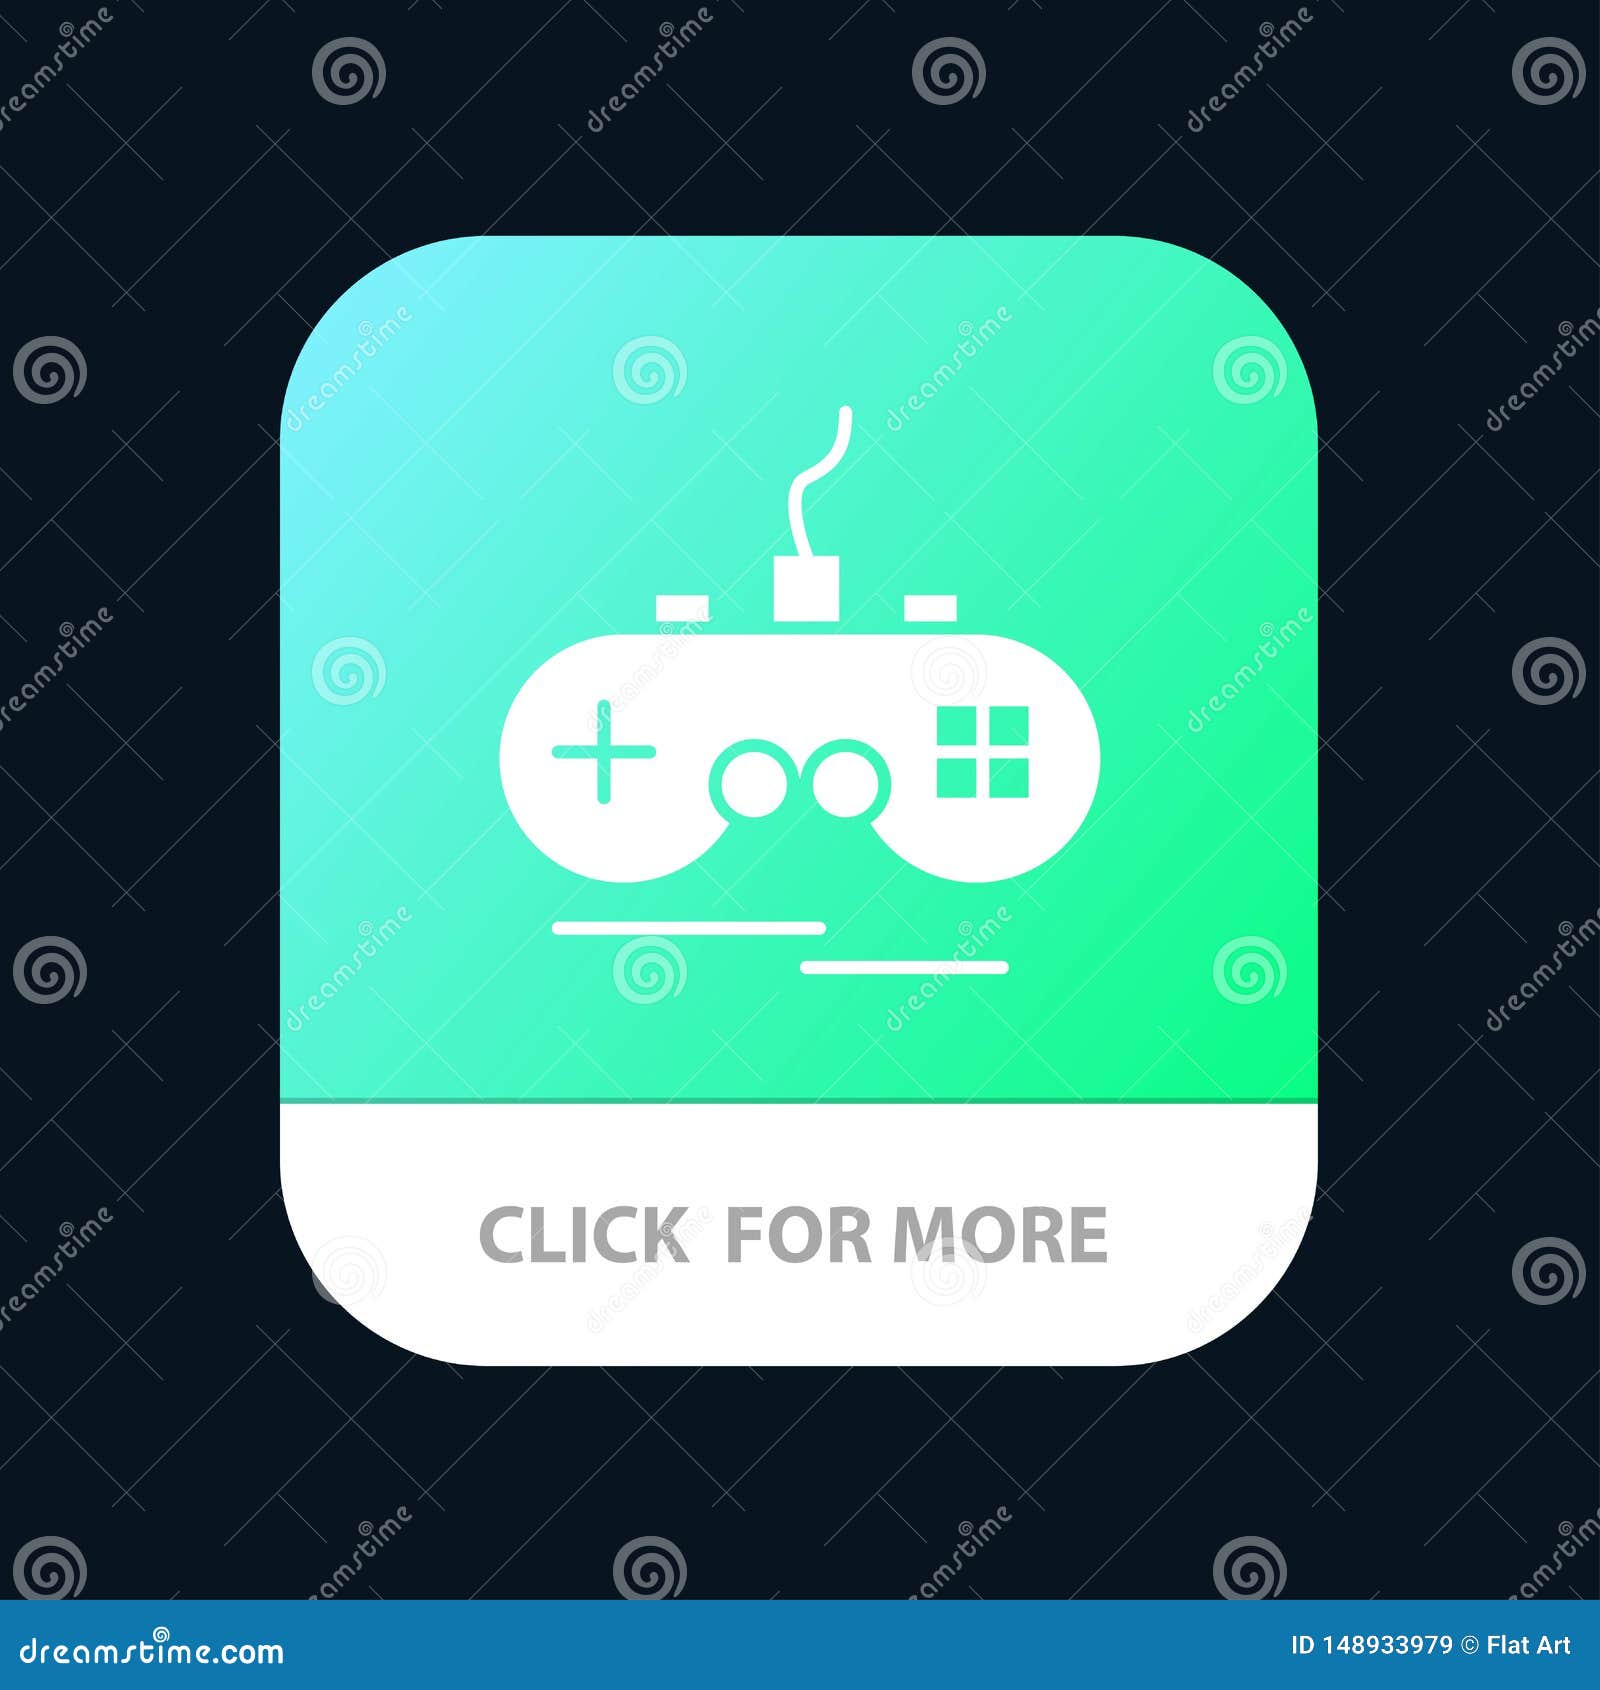 joystick, wireless, xbox, gamepad mobile app icon 